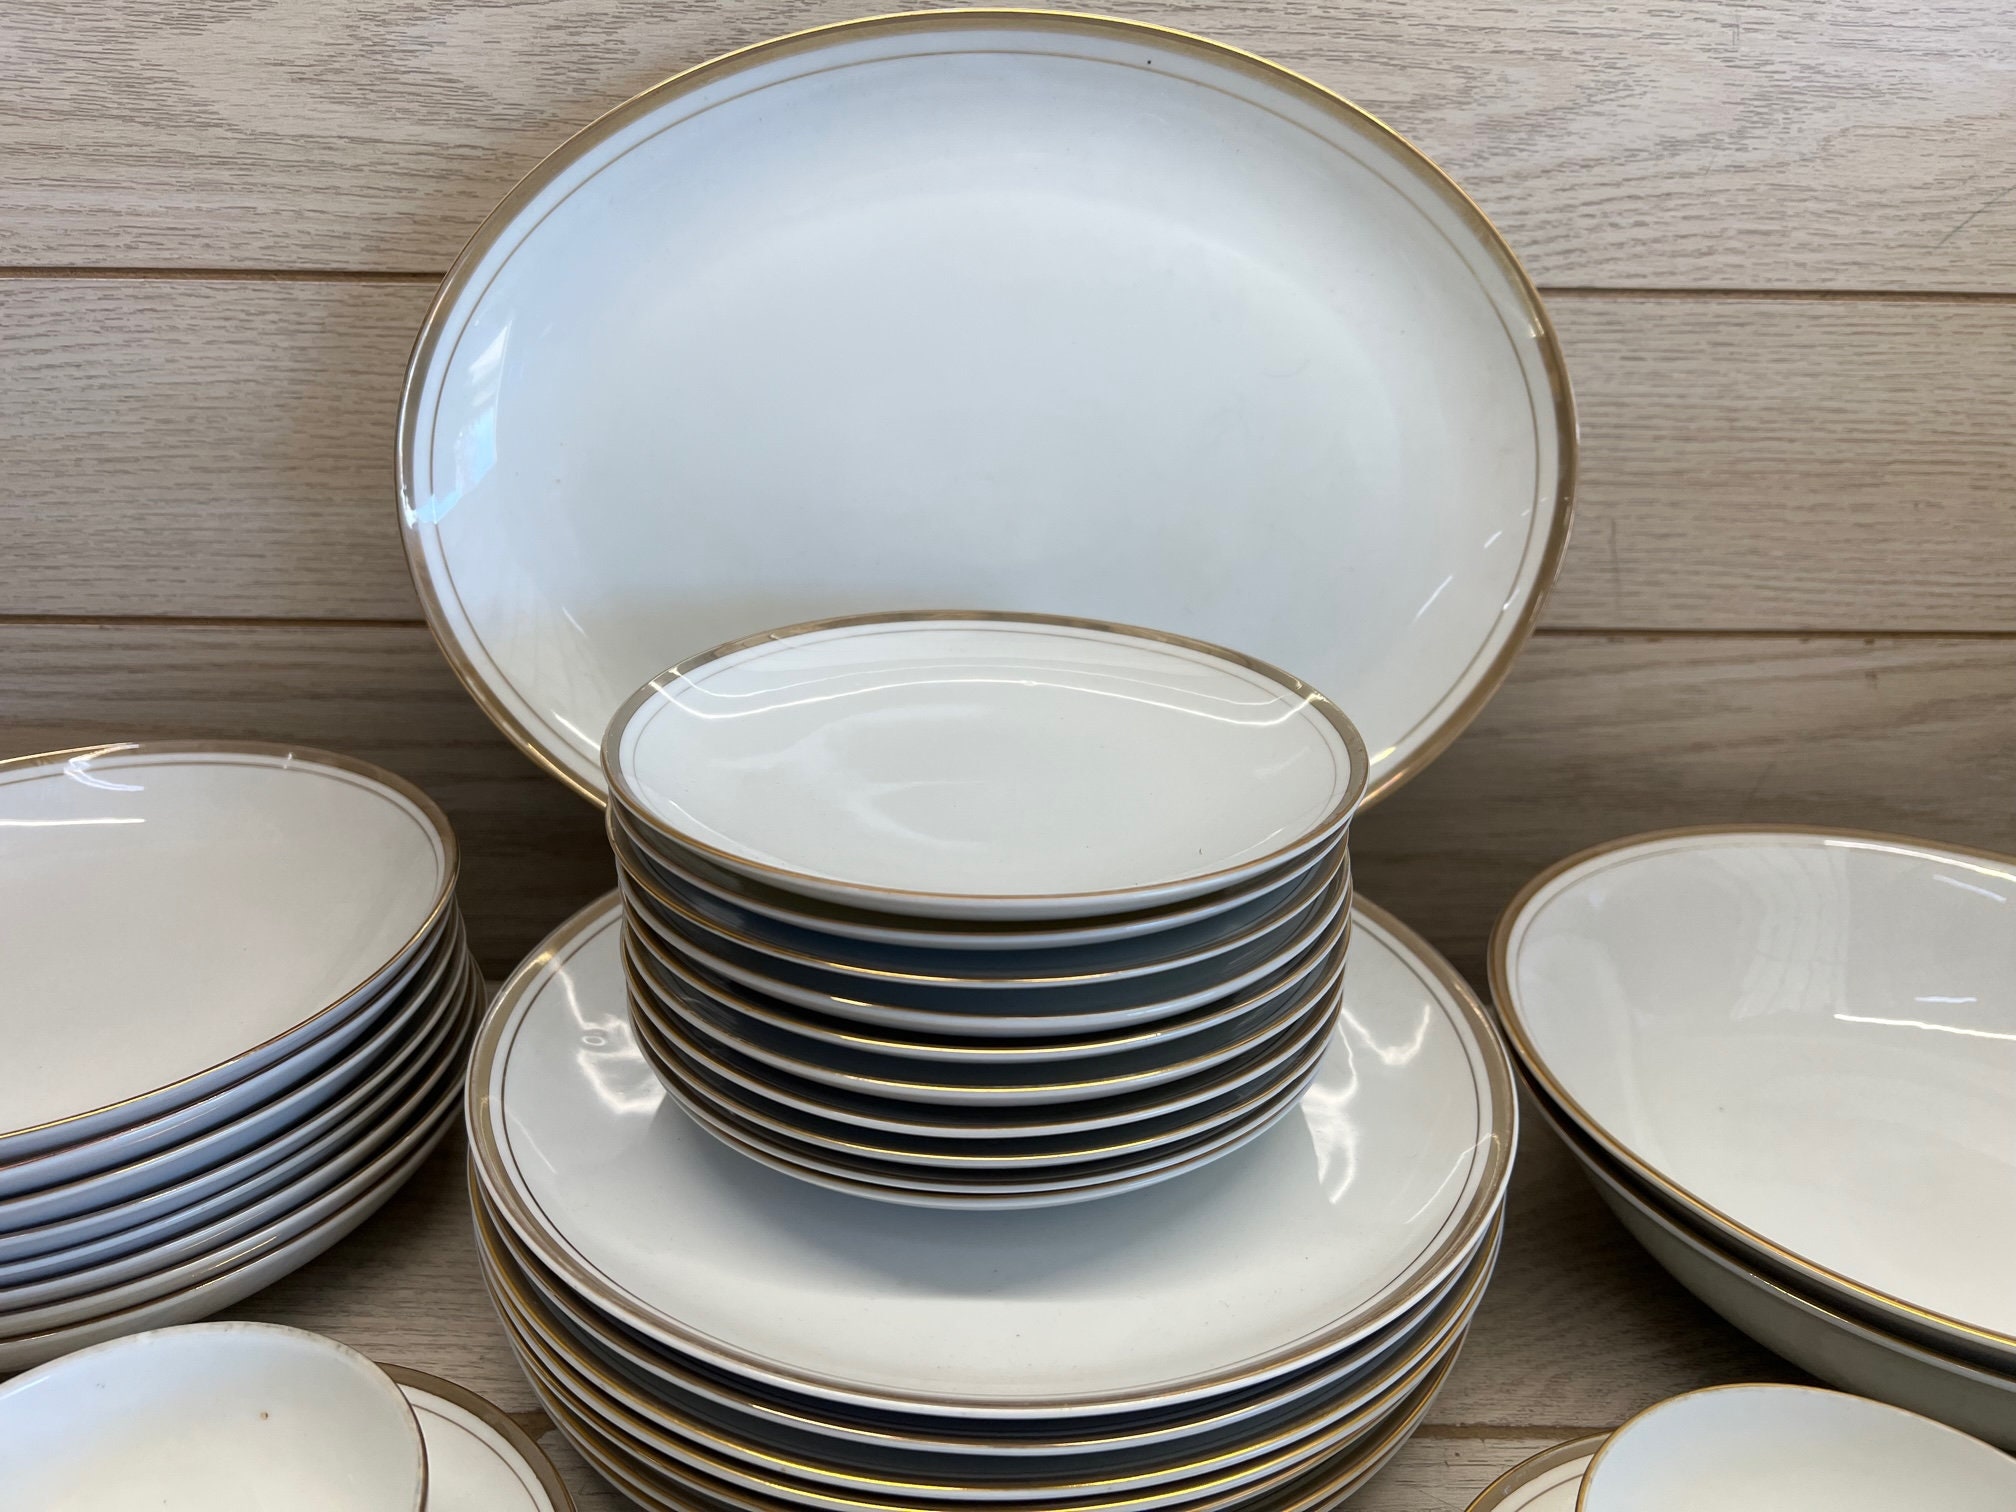 Golden Bone China Ceramic Plates Dinner Set Royal Porcelain Elegant Dinnerware  Set From Sshoes, $35.18